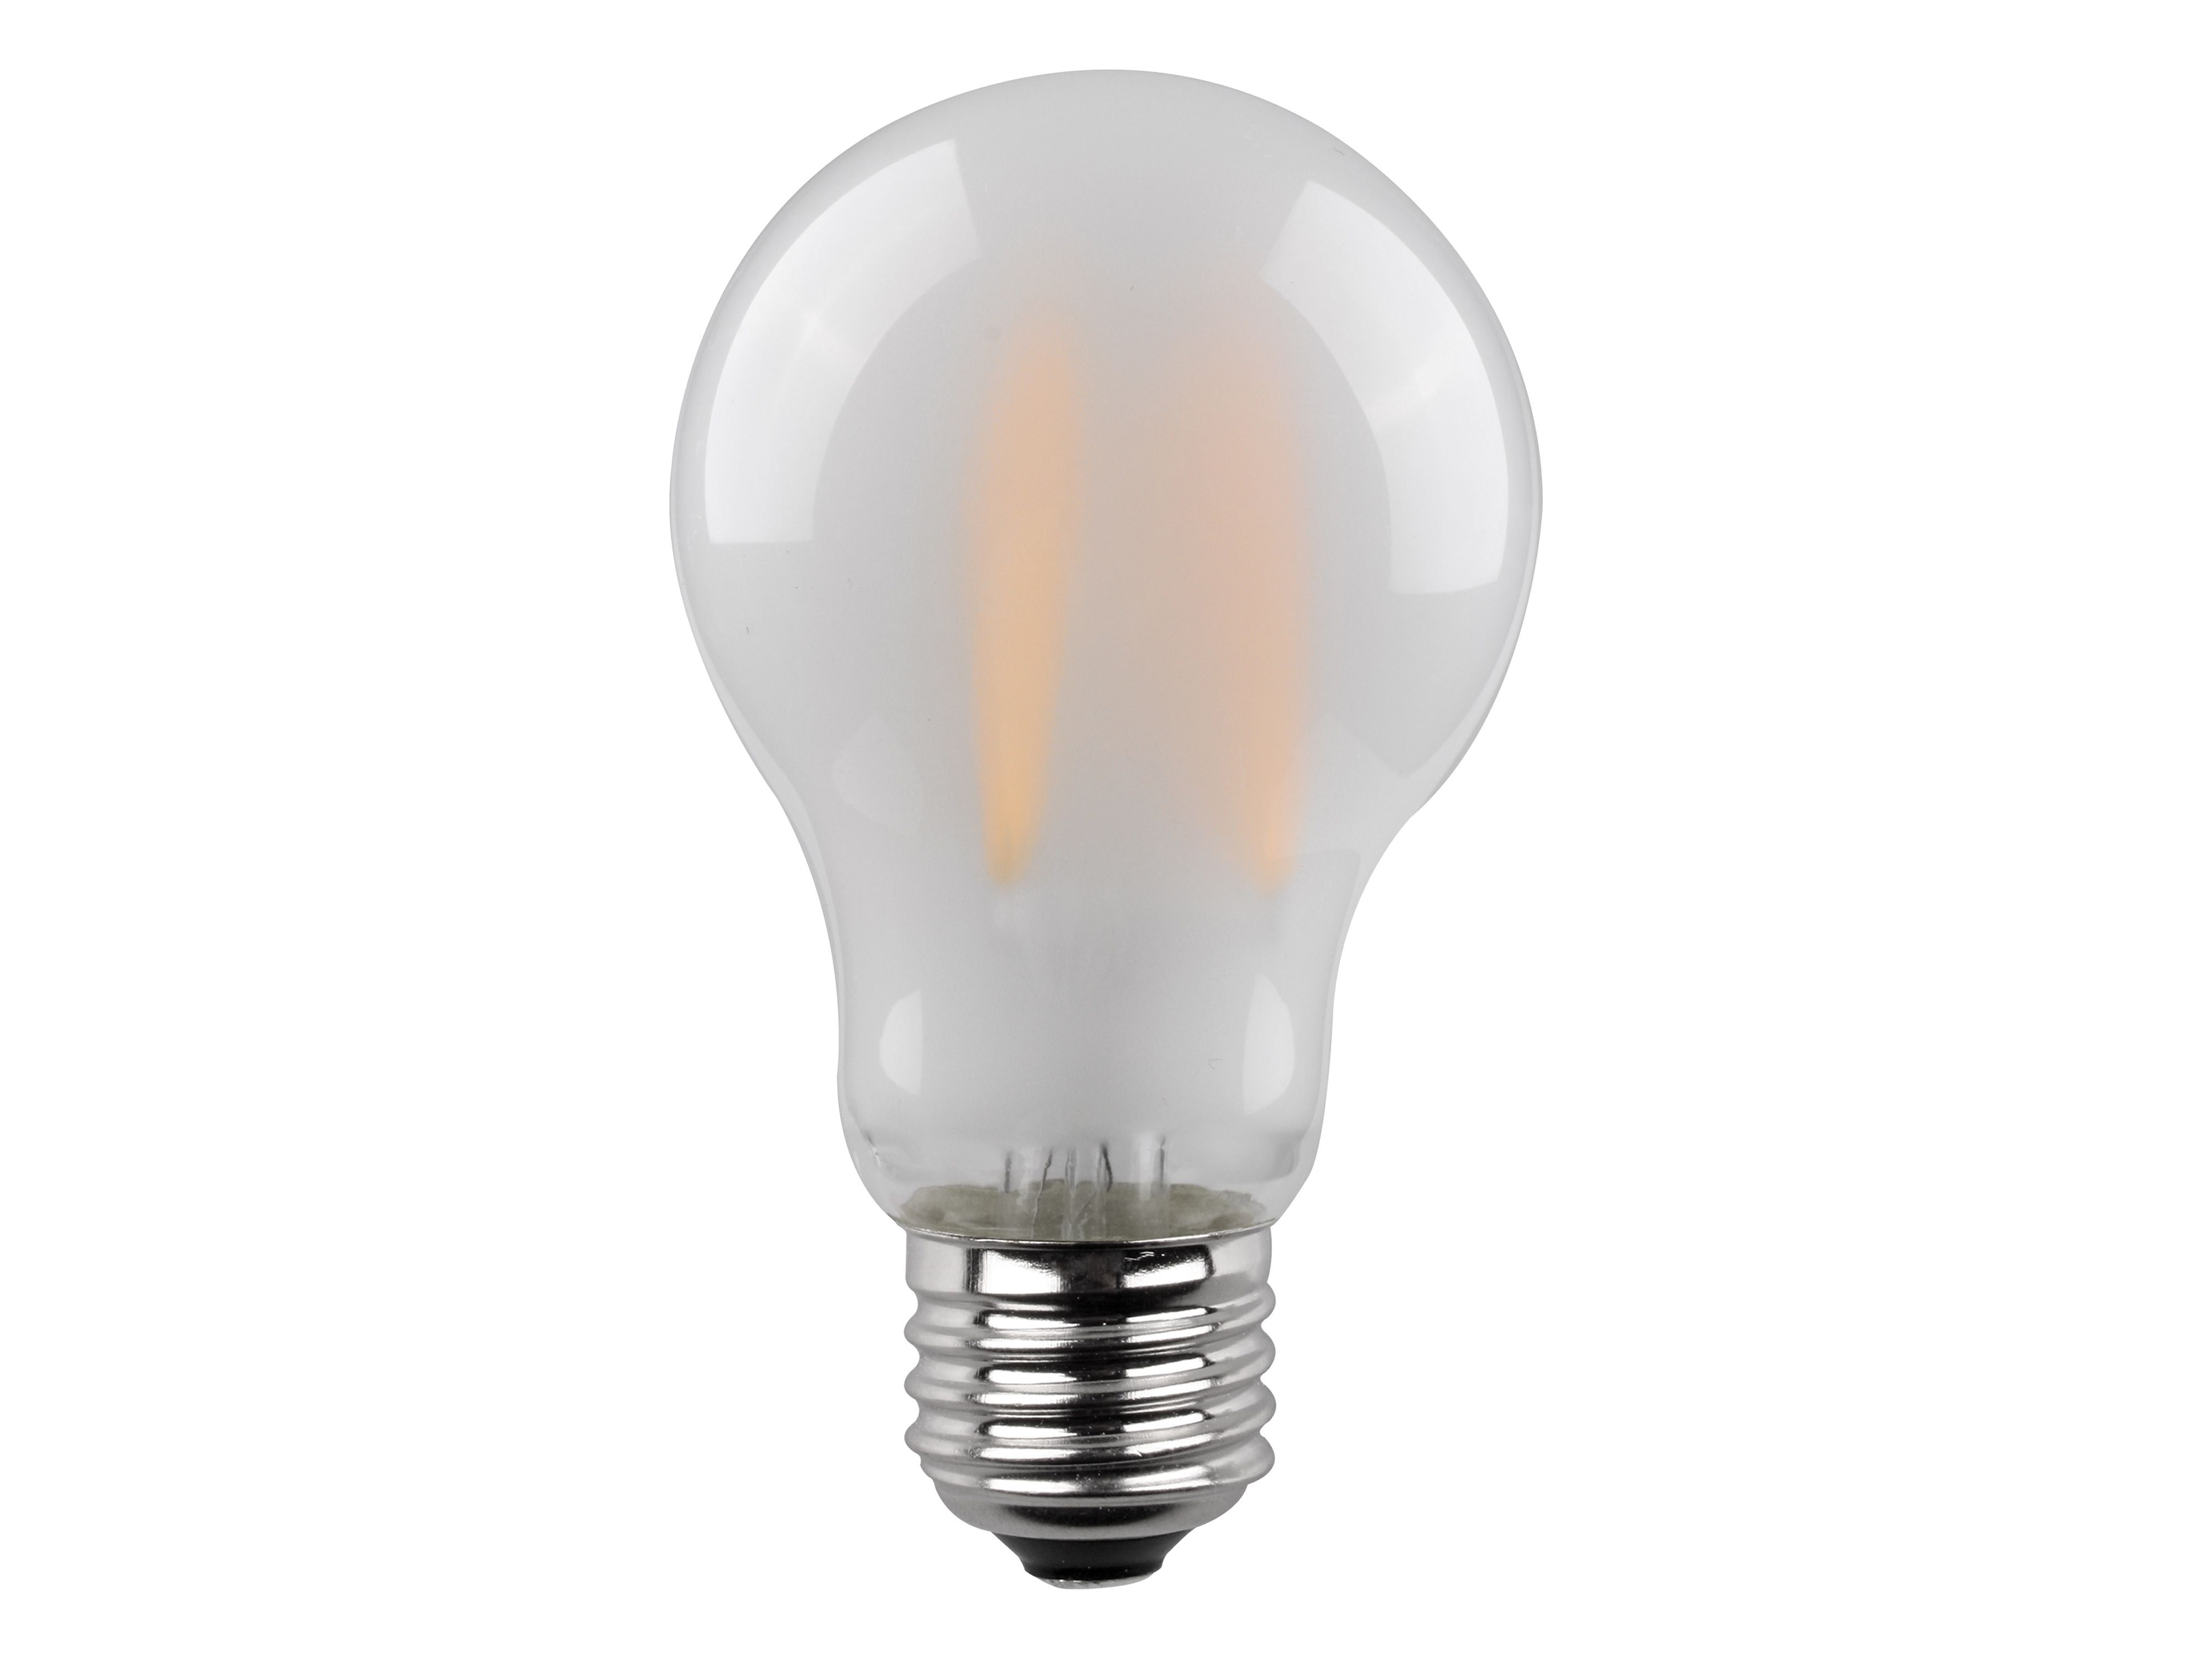 LED-Lampe 2700K MÜLLER-LICHT LED-Filament-Lampe, 806lm, F, matt, EEK: 7,5W, E27,